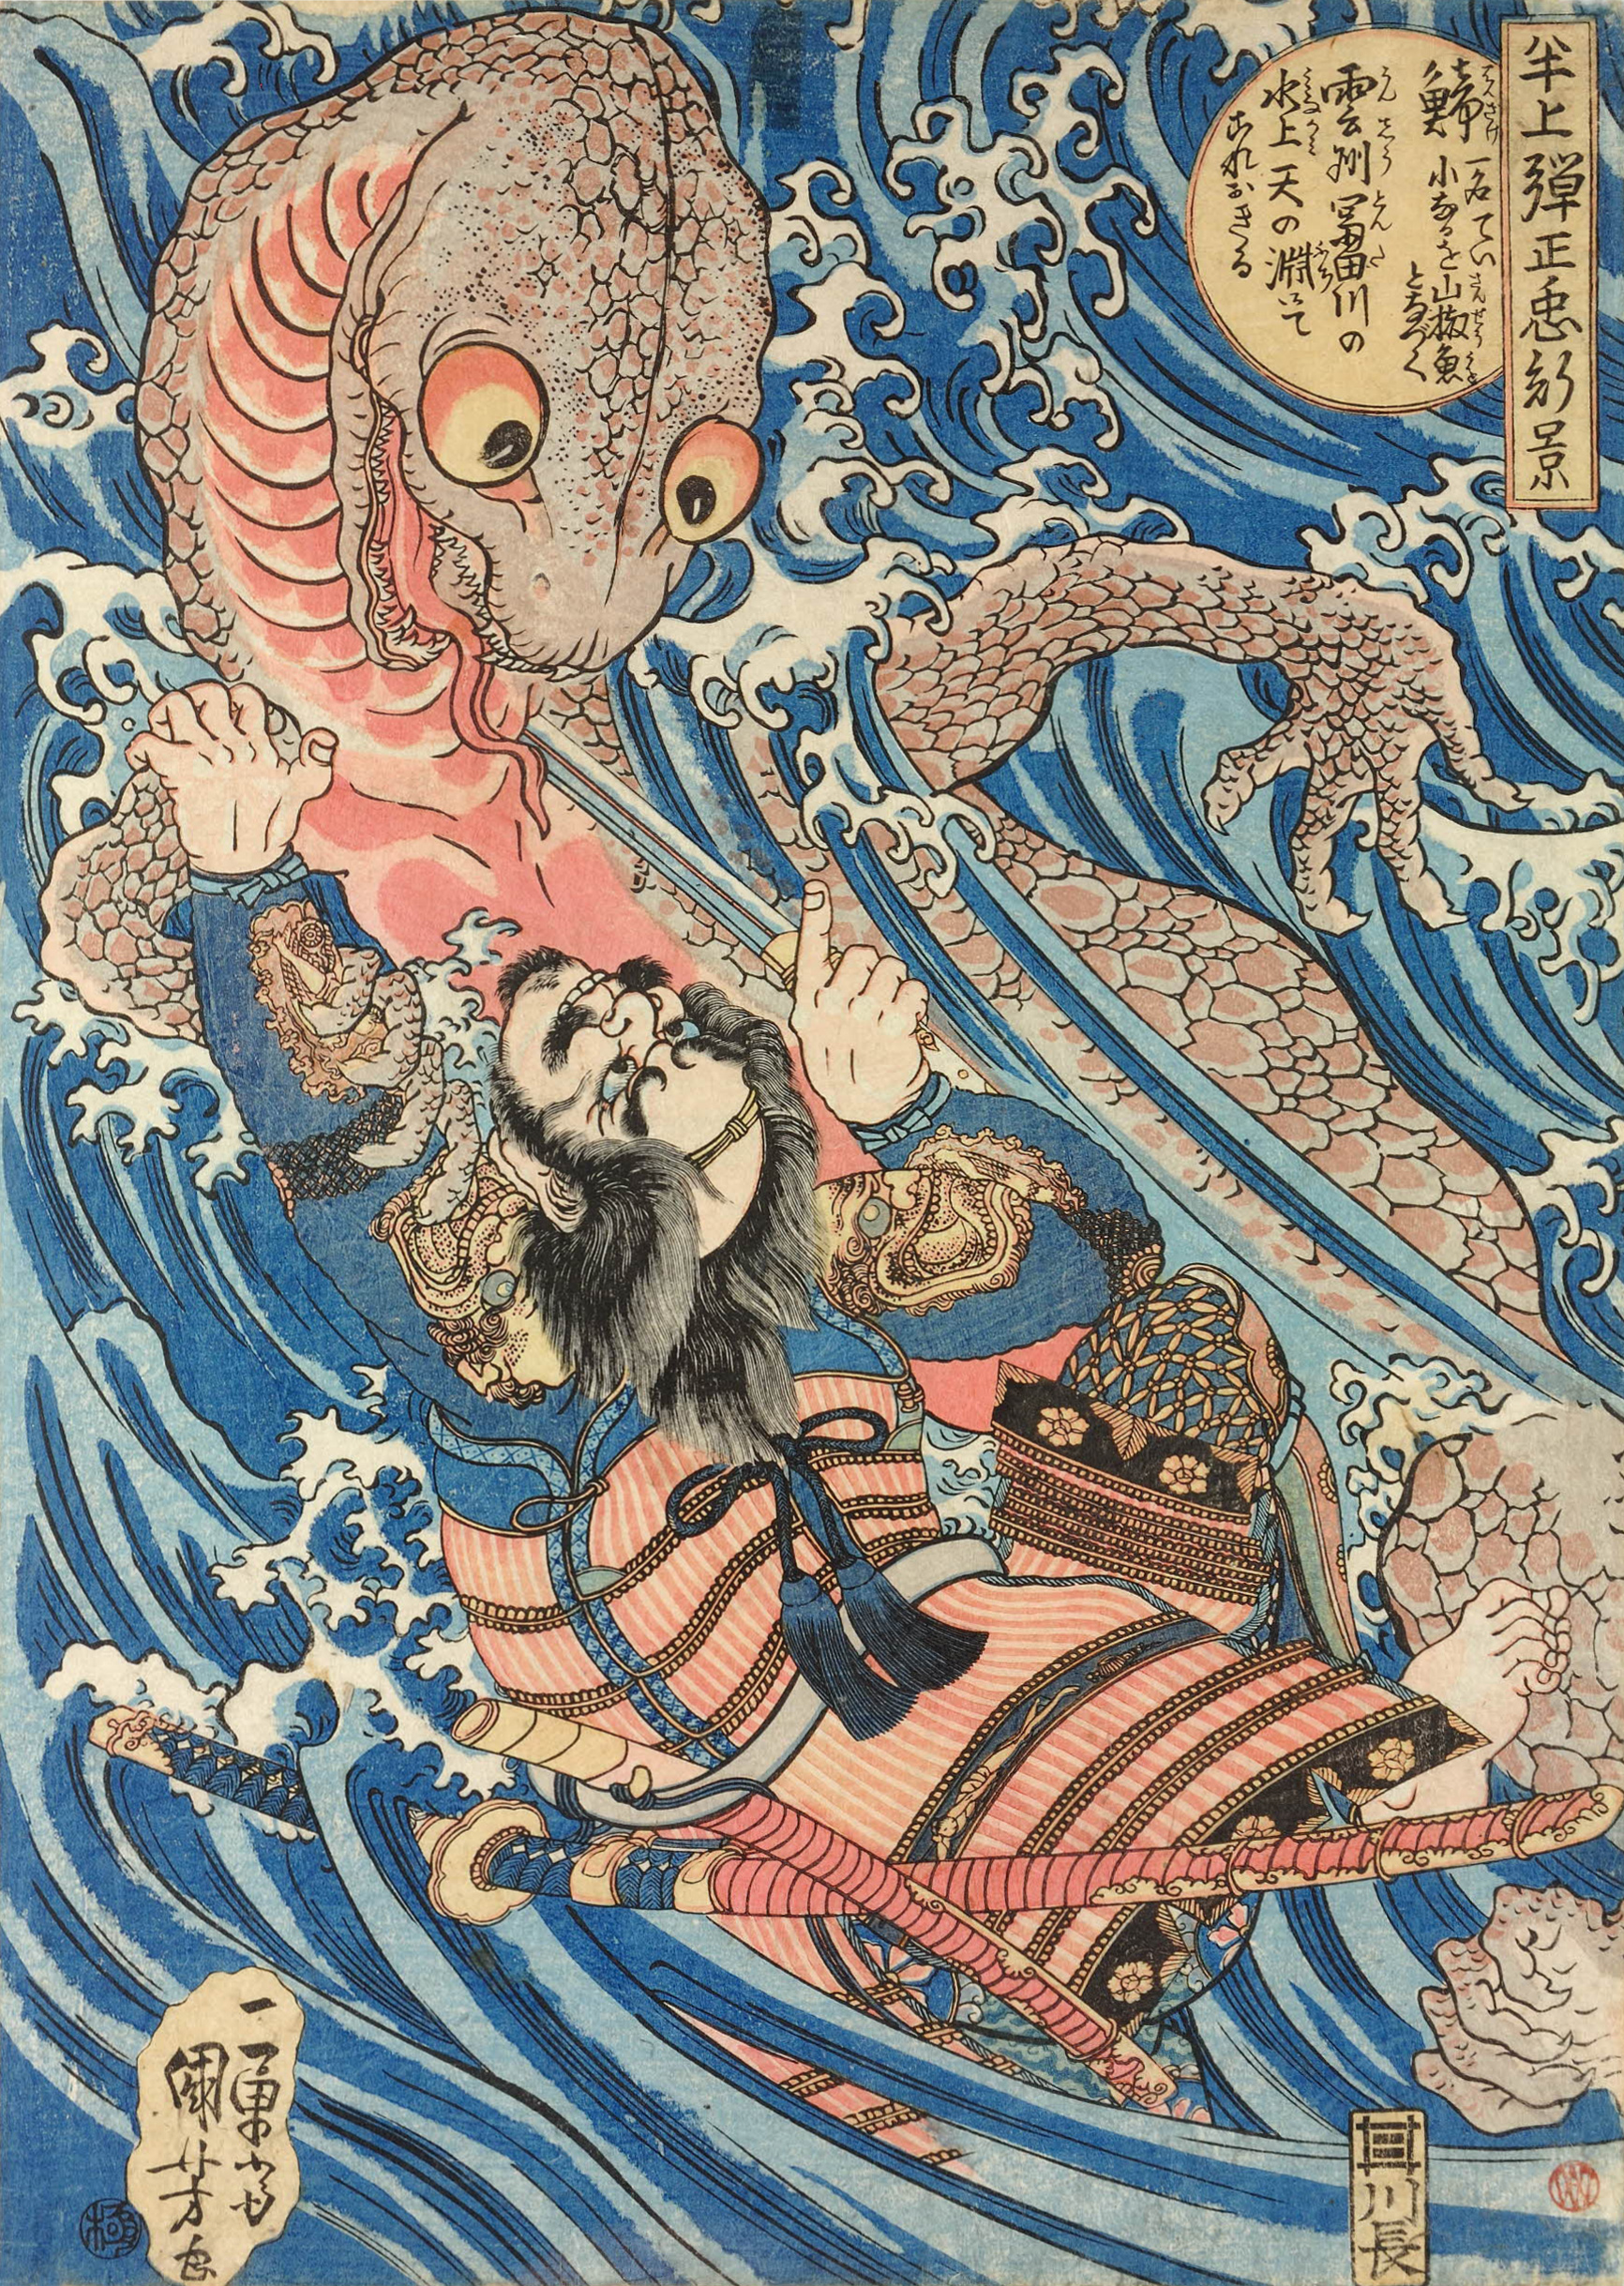 MONSTER BRAINS: Utagawa Kuniyoshi - Single Panels and Diptychs